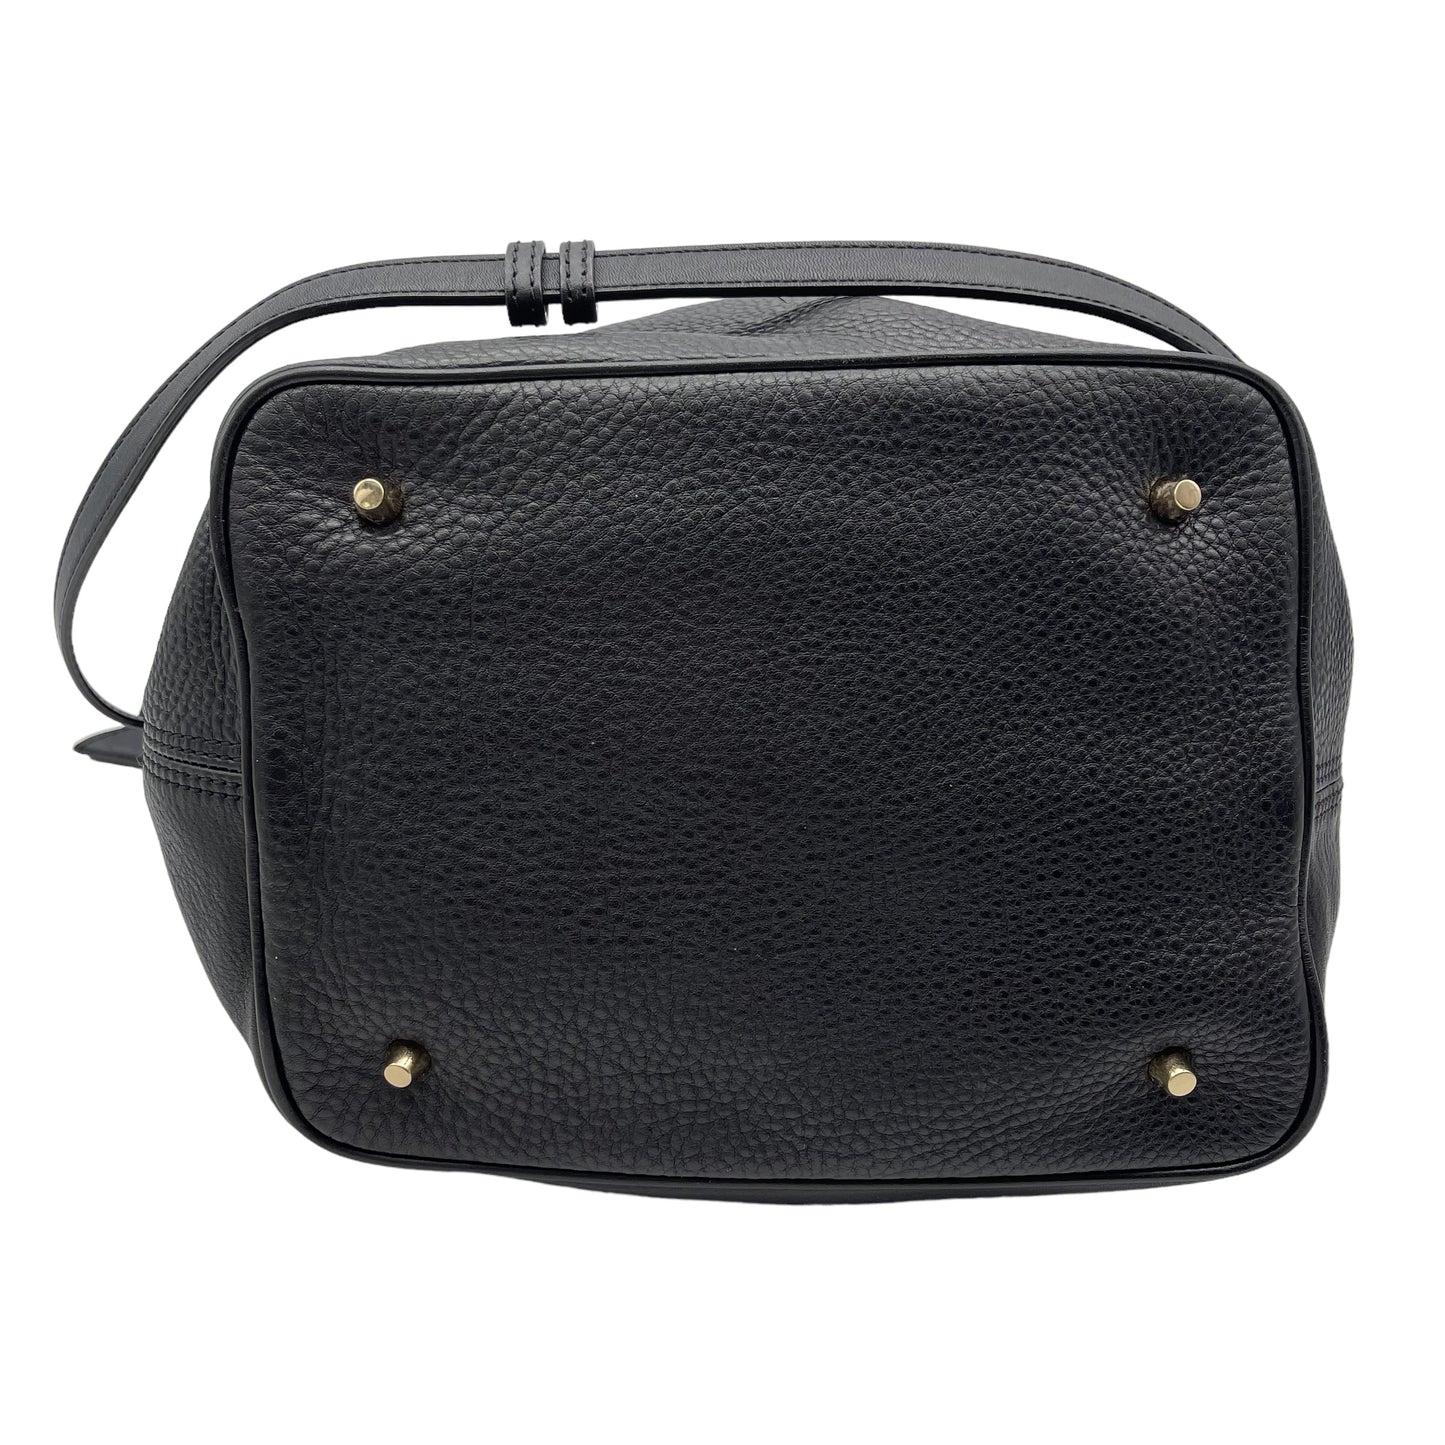 Handbag Luxury Designer By Burberry  Size: Medium